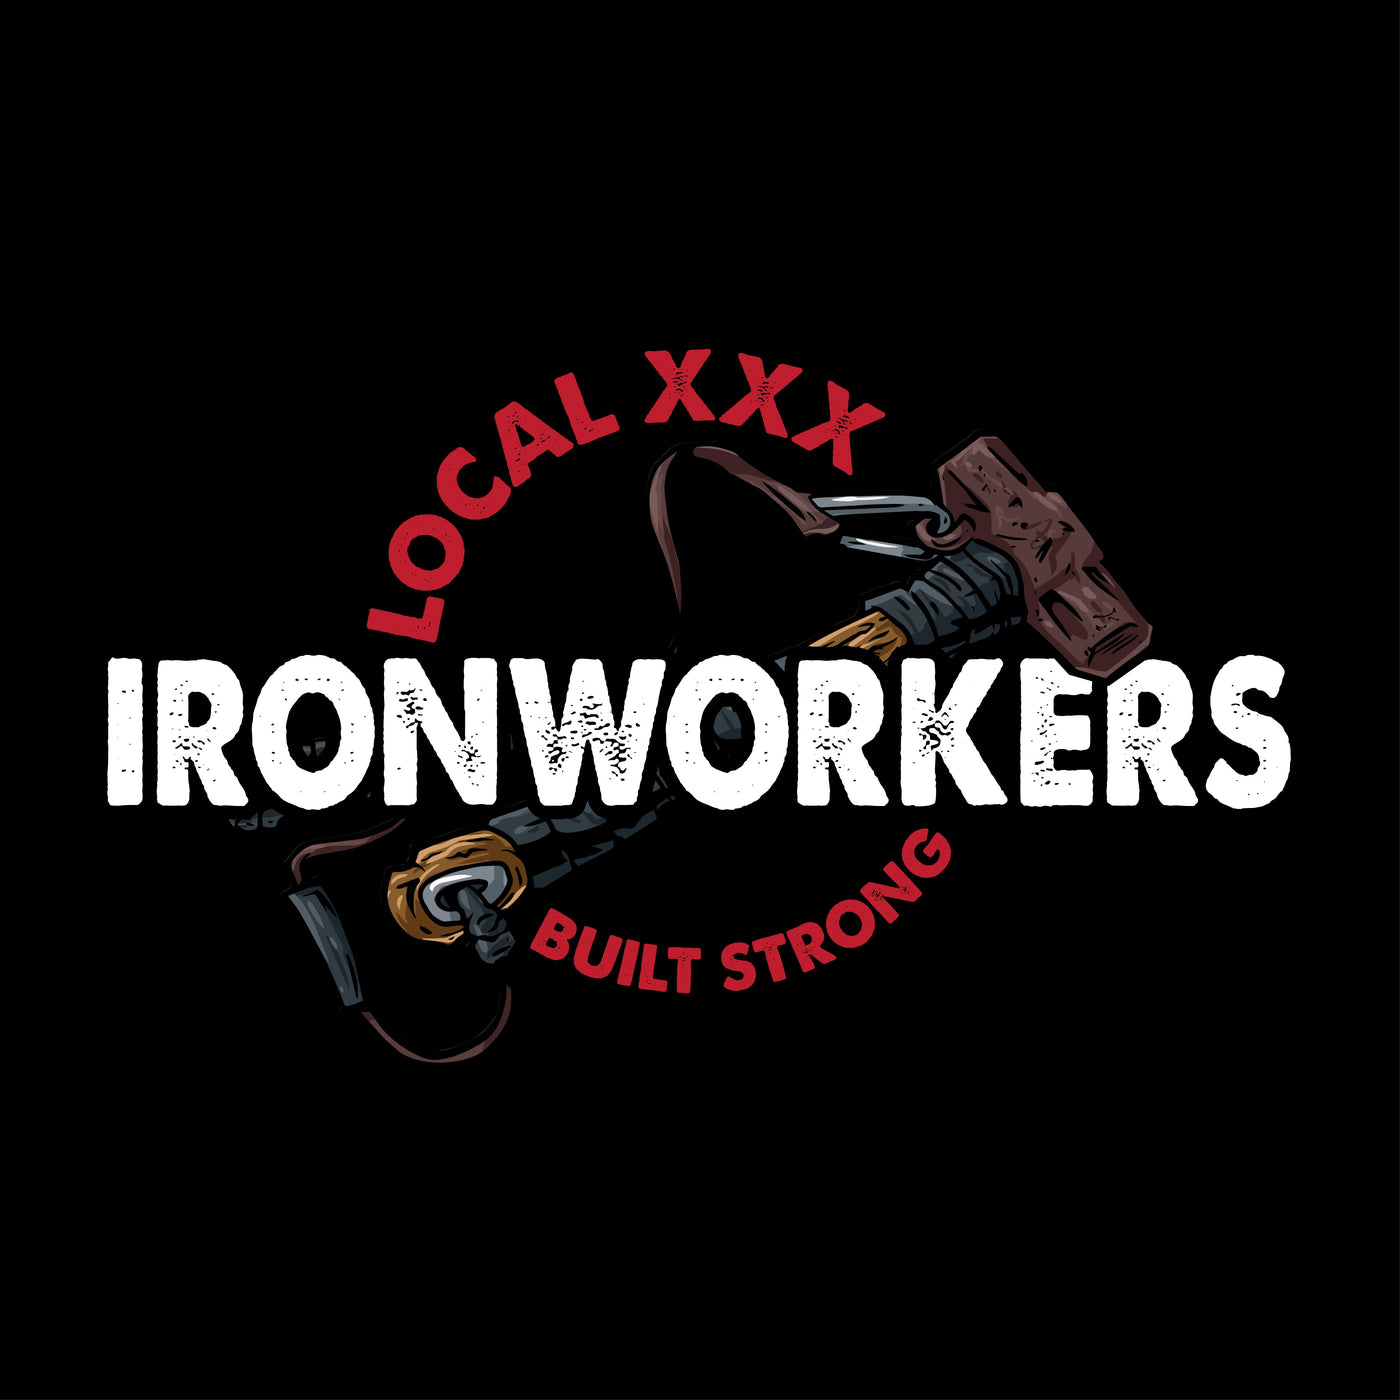 Ironworkers Hammer